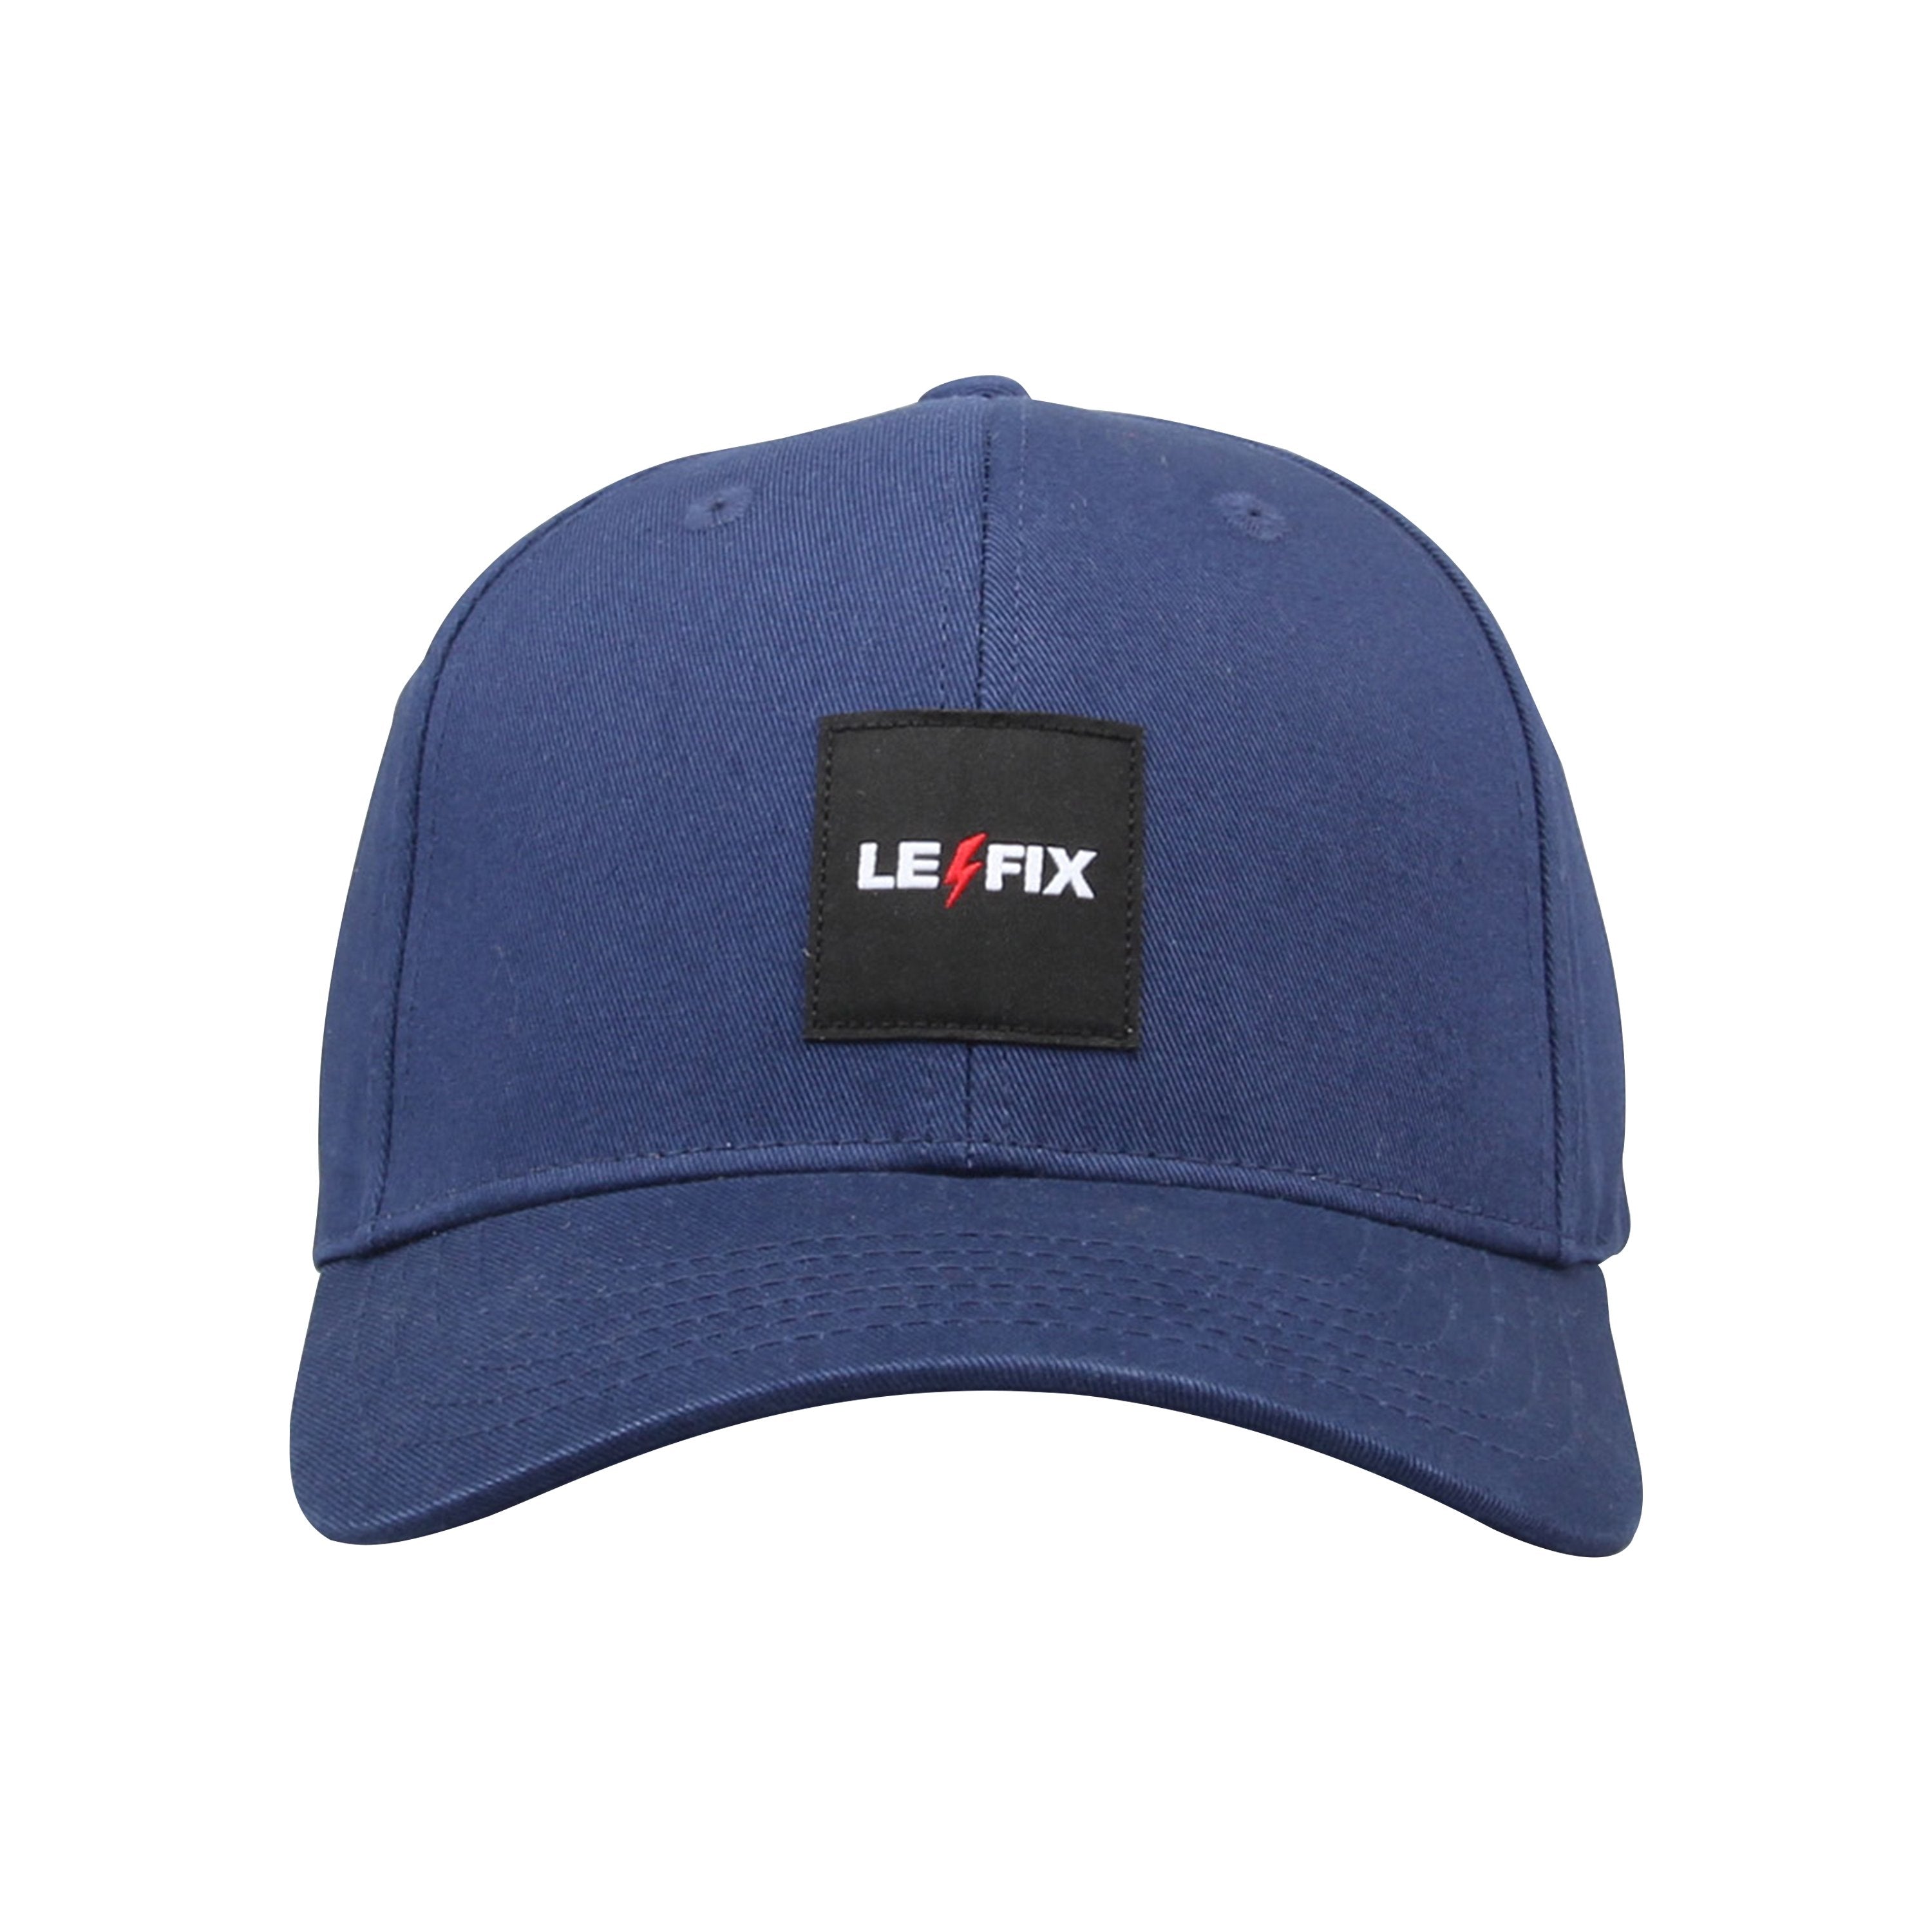 Buy LE FIX PATCH CAP – Le-fix.com